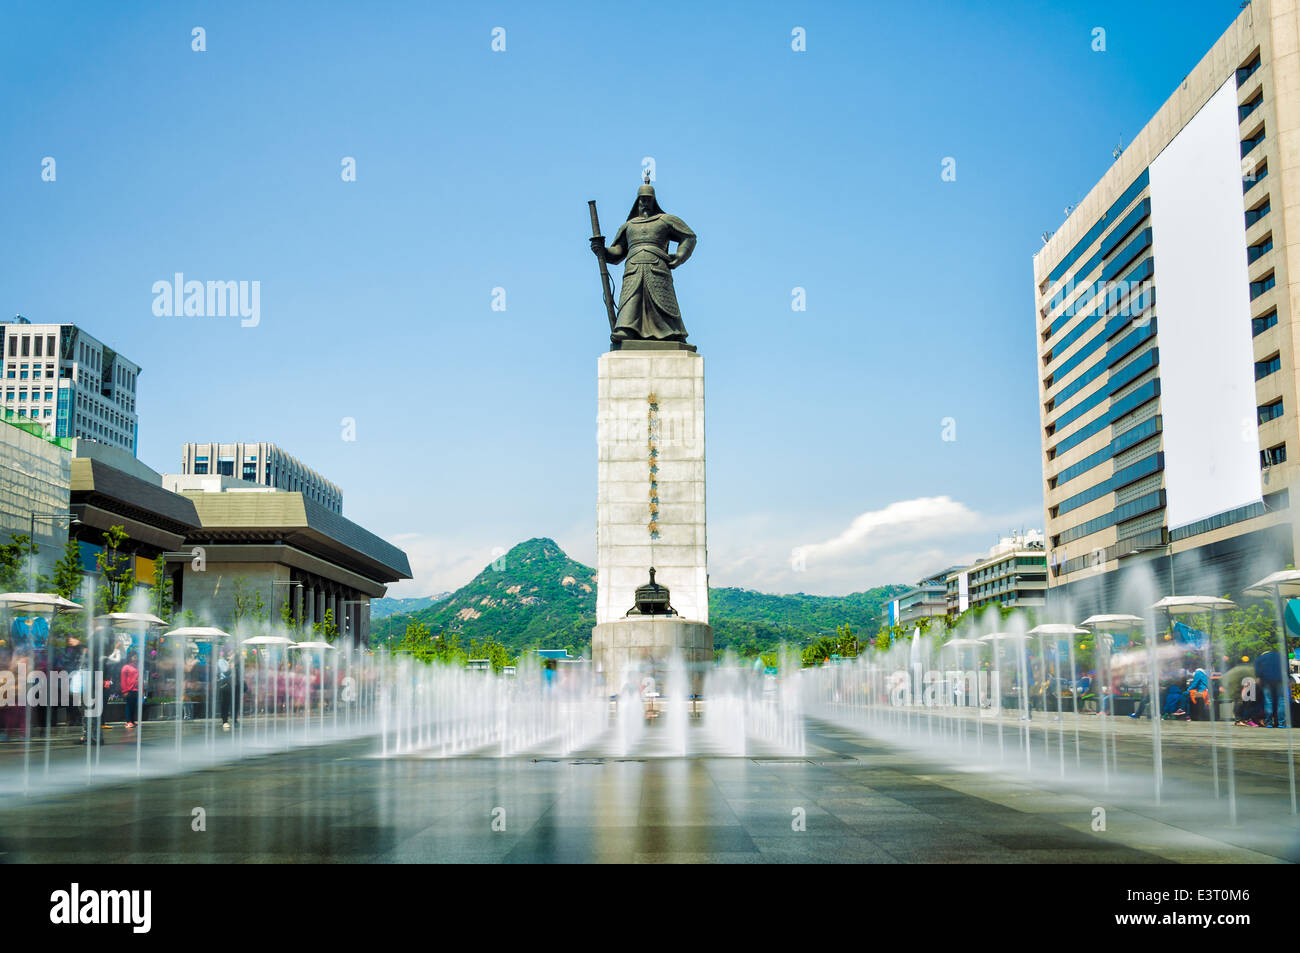 The statue of Admiral Yi Sun Sin in Gwanghwamun Square in Seoul, South Korea. Stock Photo